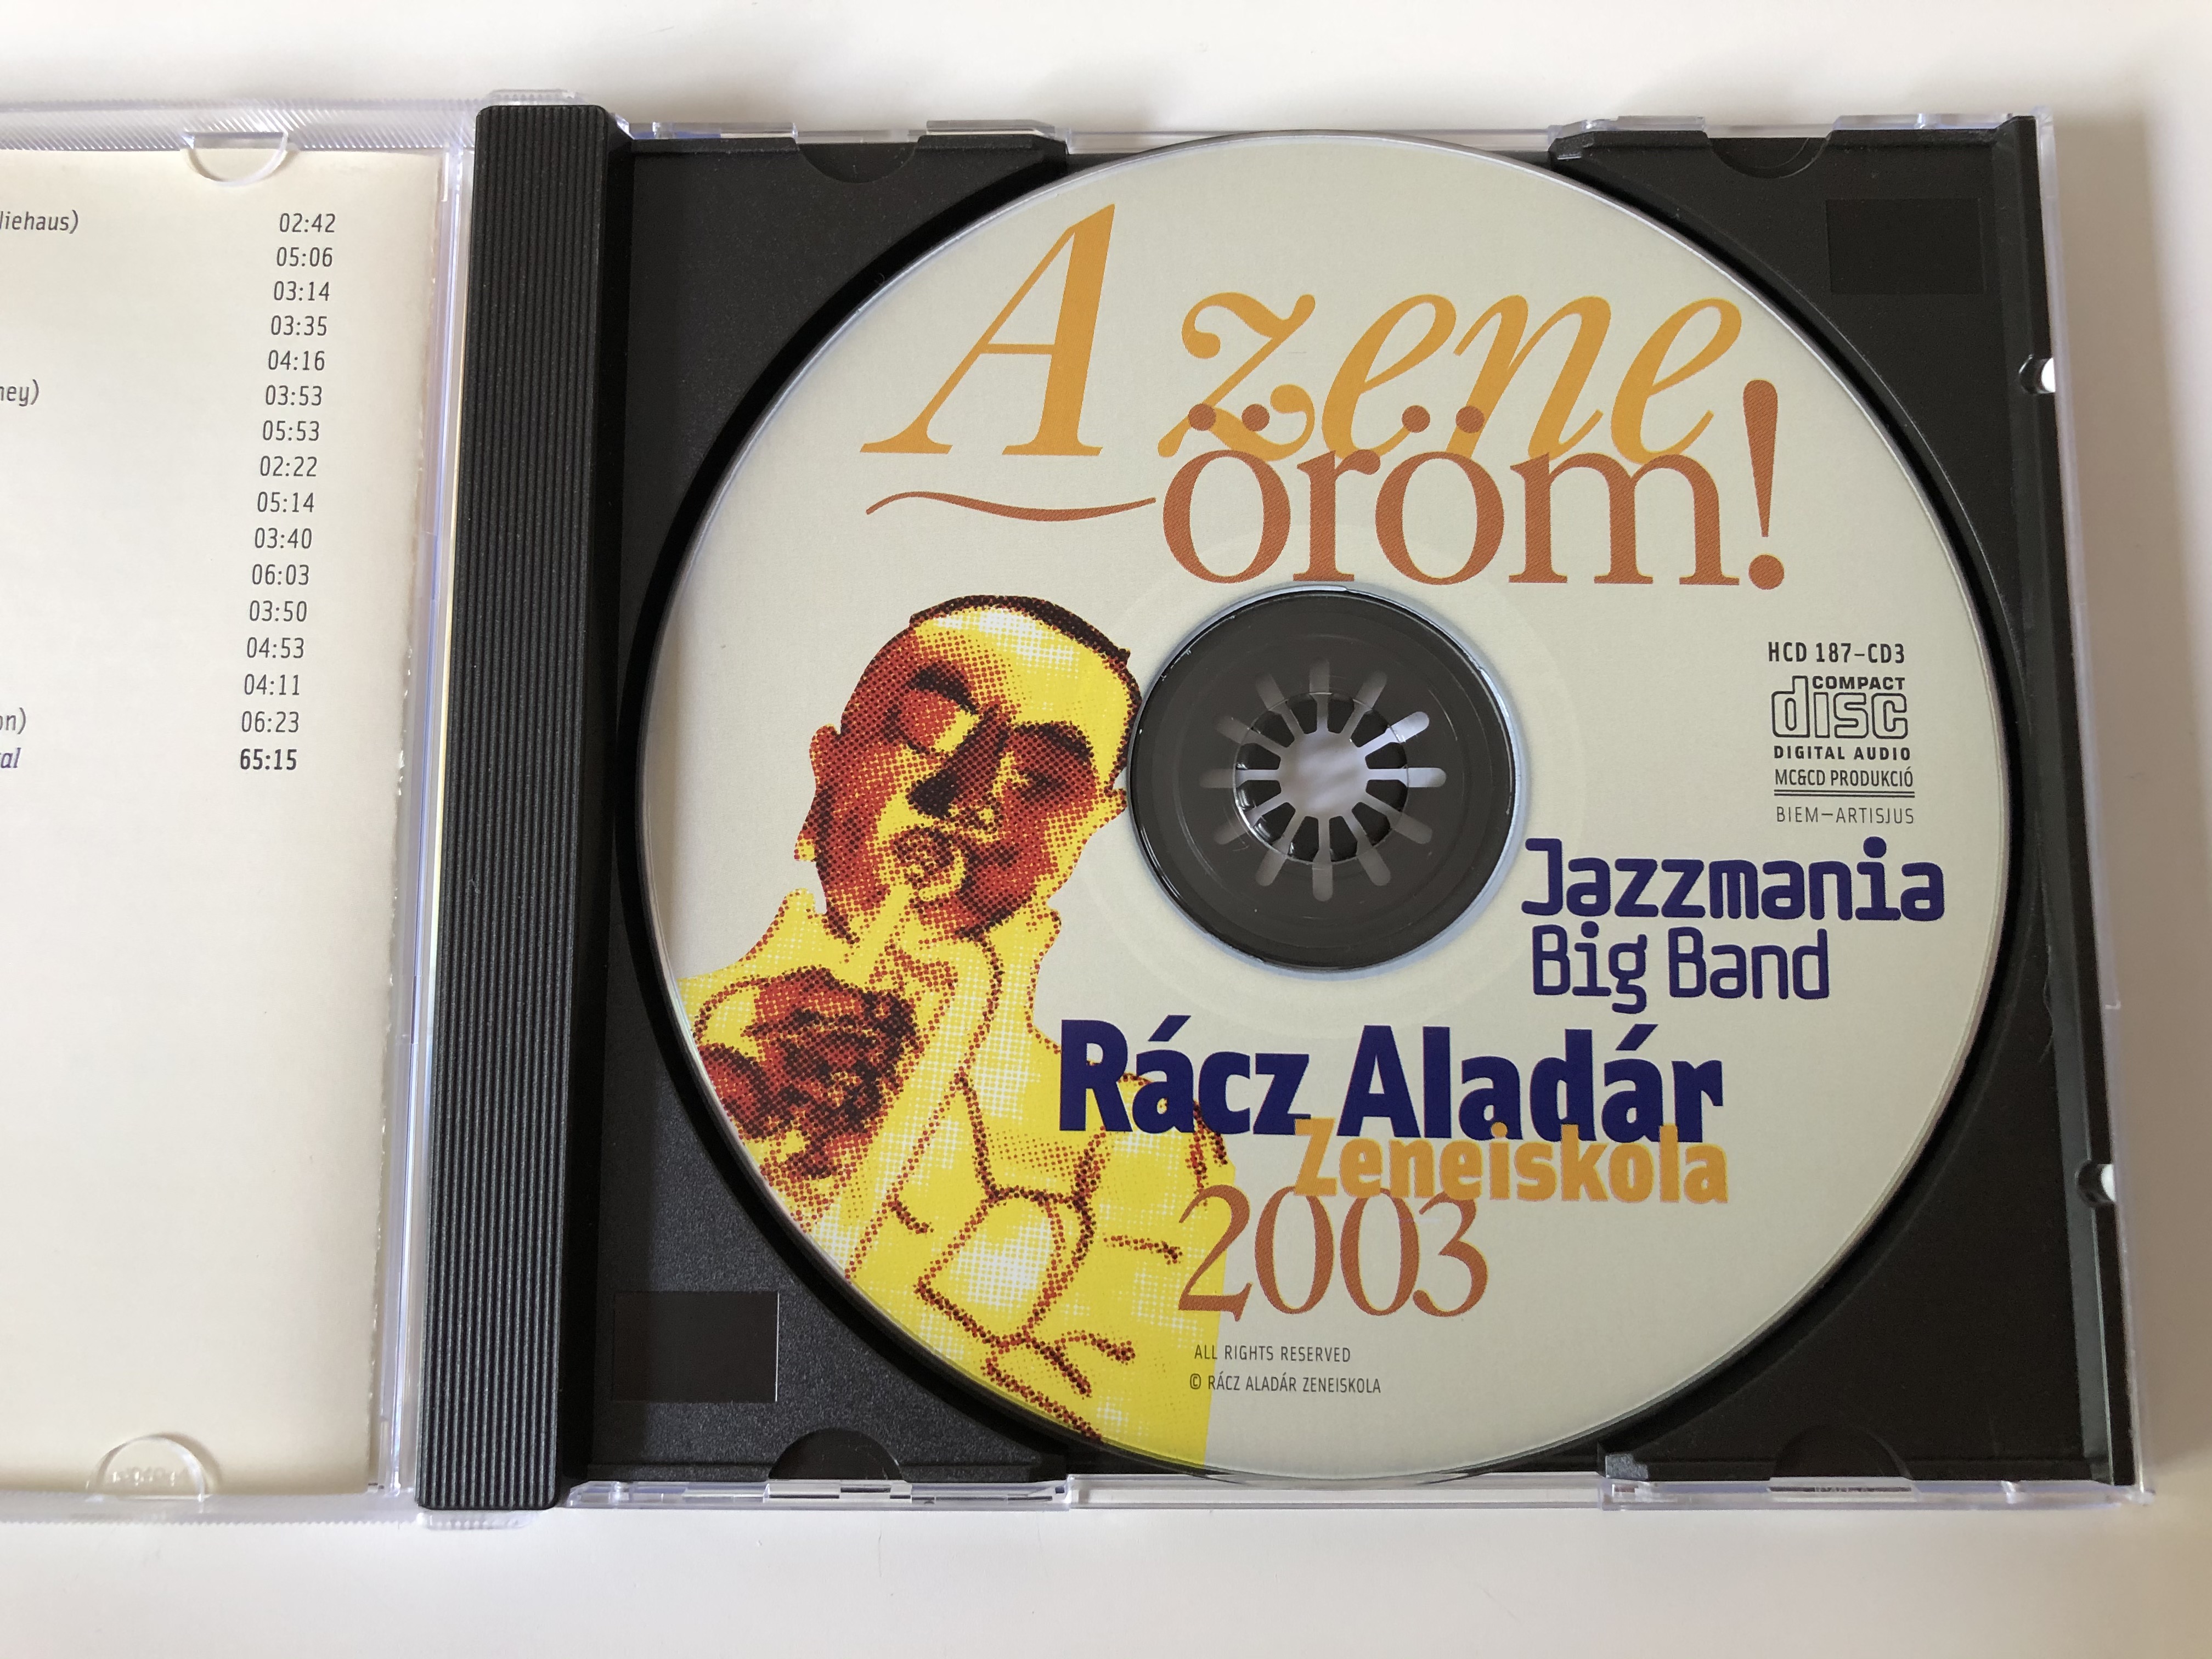 a-zene-orom-3.-rasz-aladar-zeneiskola-2003-jazzmania-big-band-mc-cd-produkcio-audio-cd-2003-hcd-187-cd3-6-.jpg